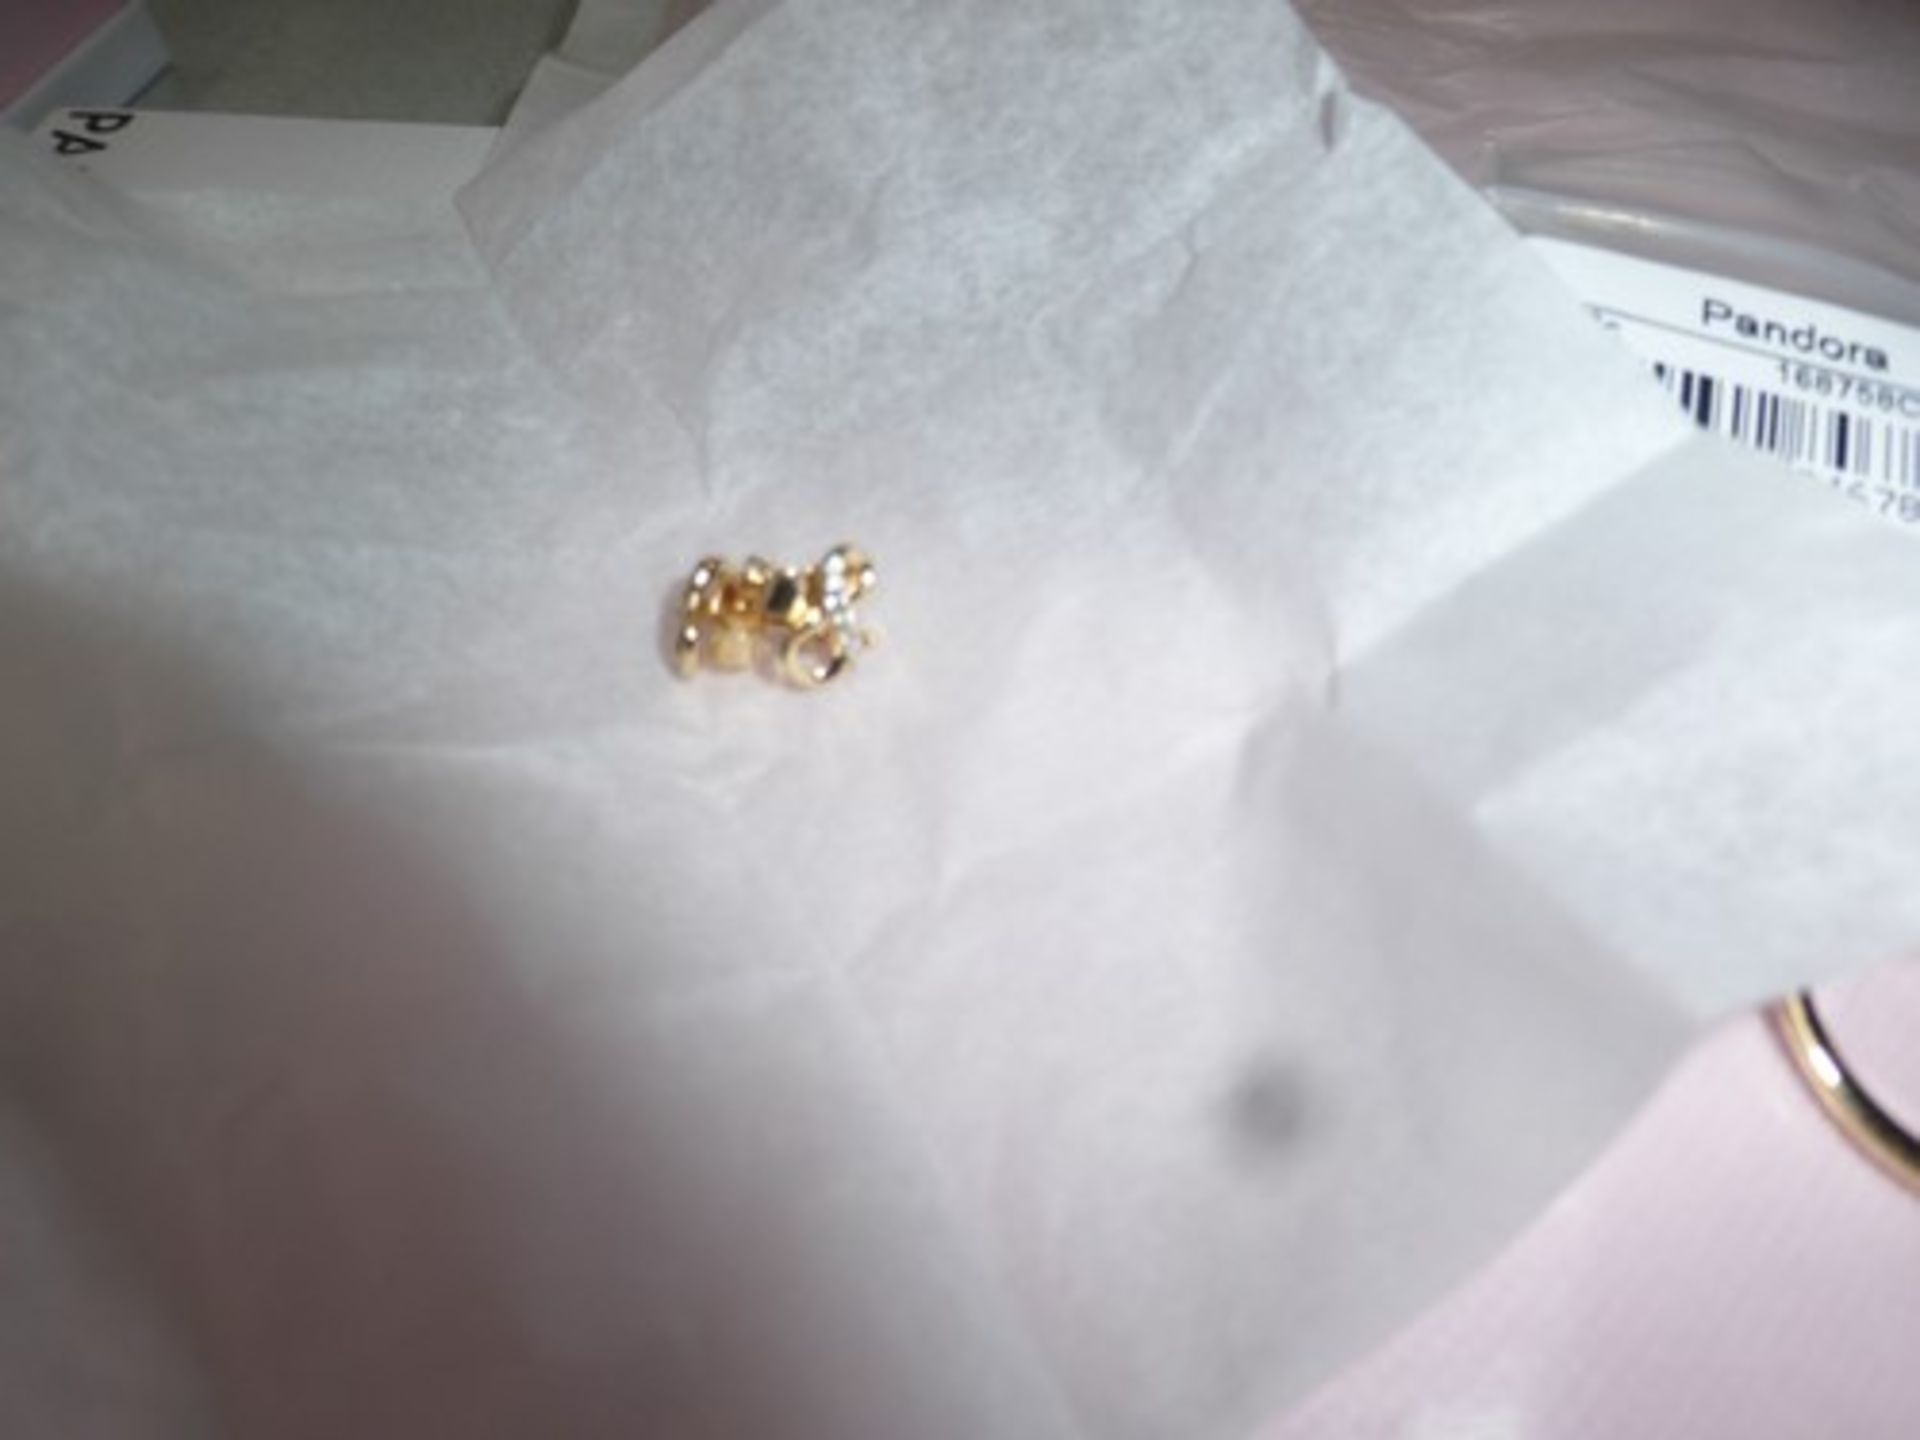 3 x items of Pandora jewellery, comprising of 1 x pair of infinity stud earrings, 1 x diamond